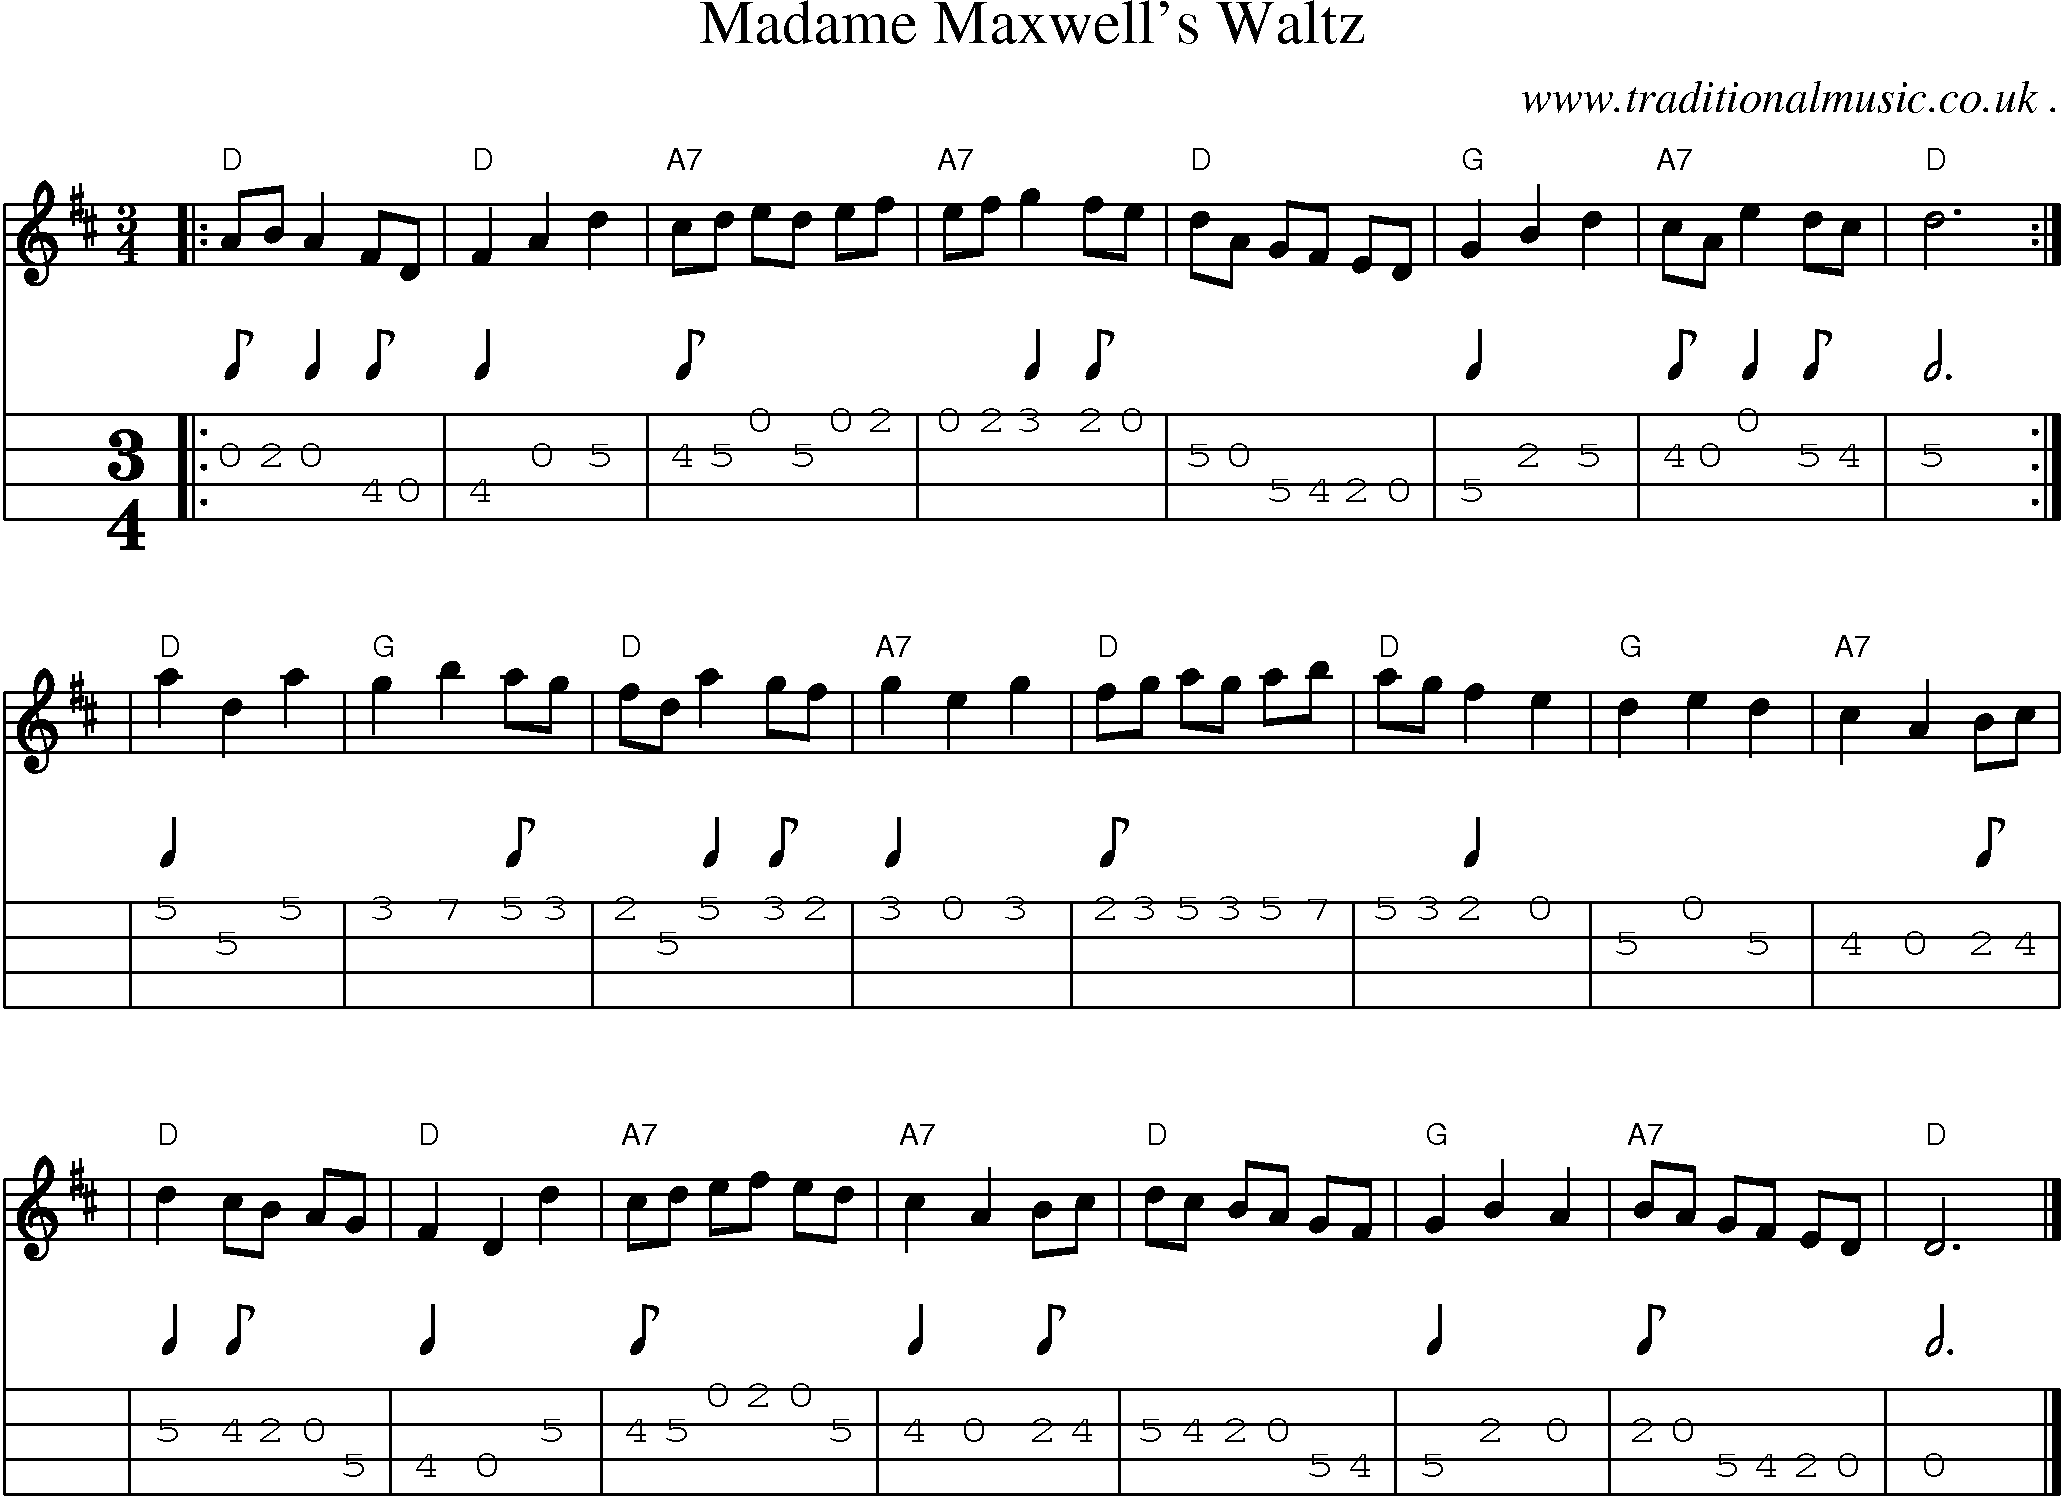 Sheet-music  score, Chords and Mandolin Tabs for Madame Maxwells Waltz